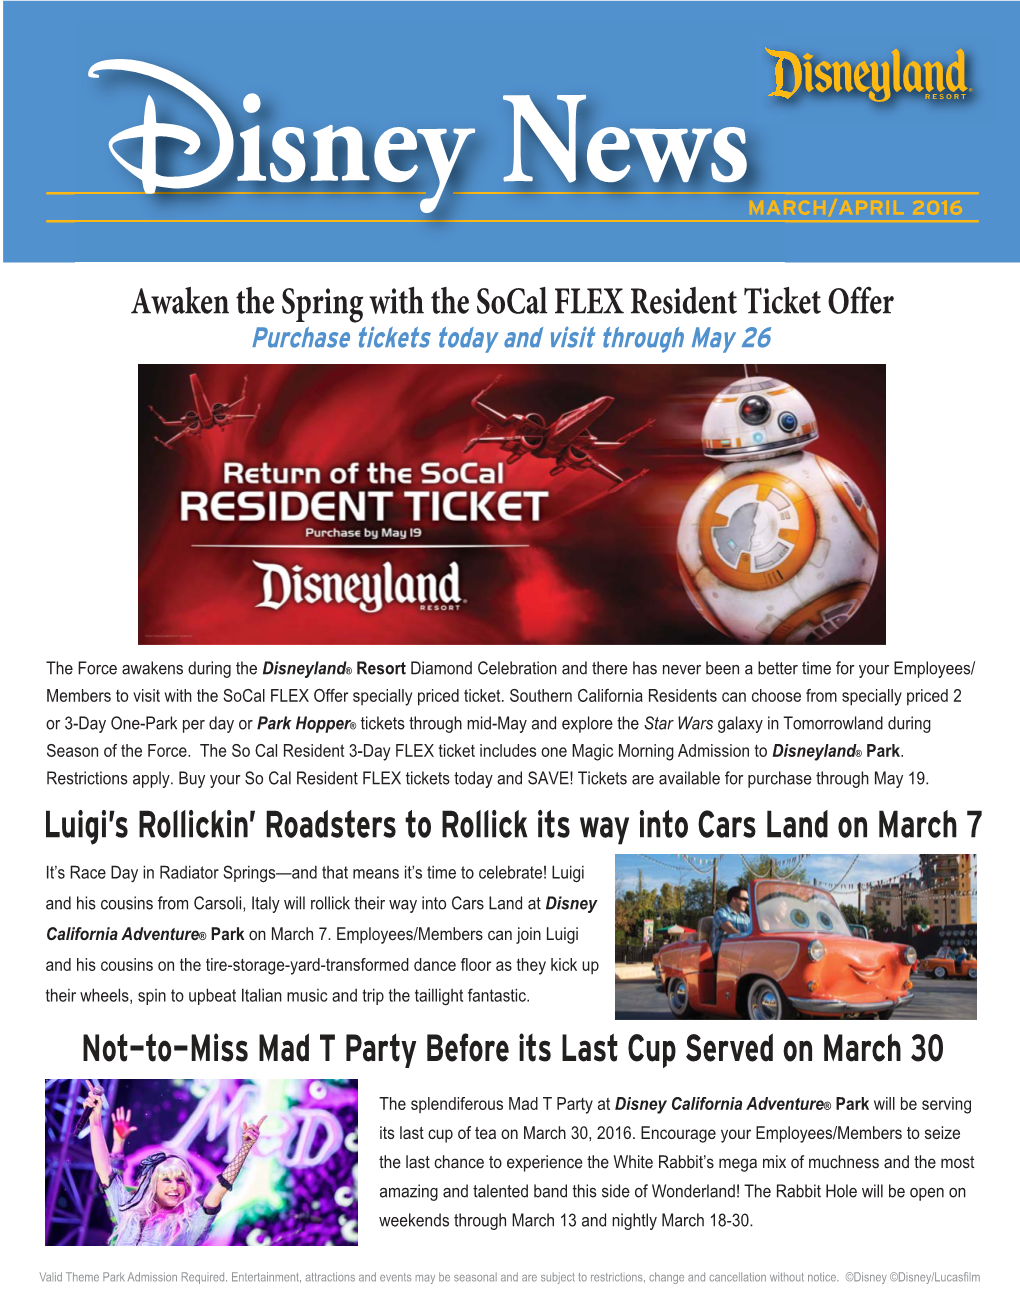 SO61692 March April CTS DLR Disney News Artwork.Eps